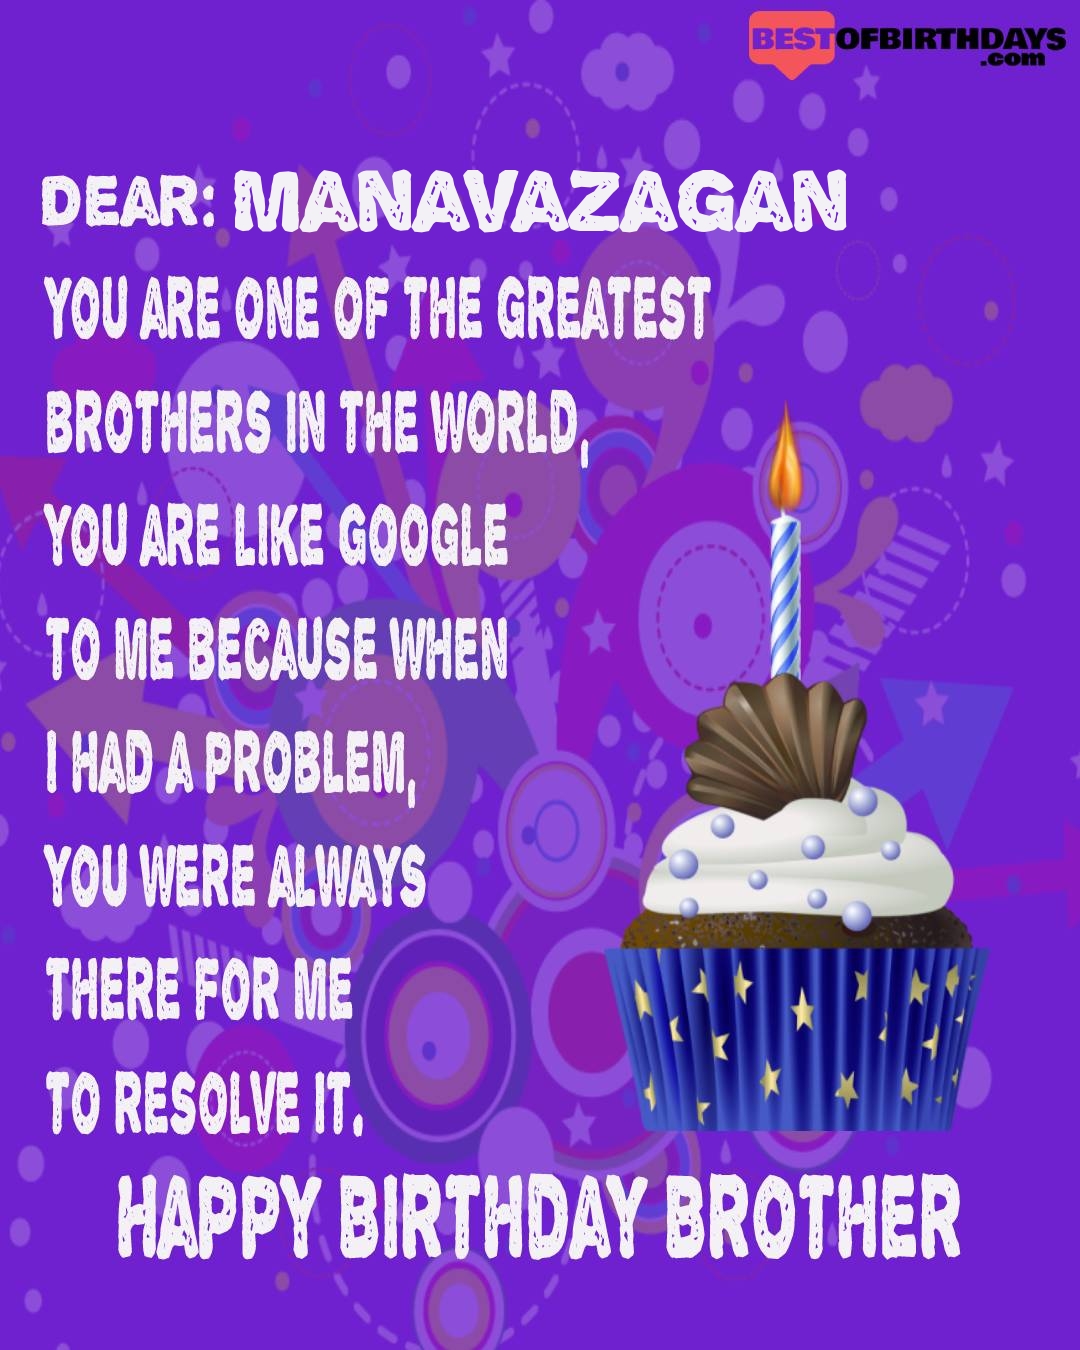 Happy birthday manavazagan bhai brother bro